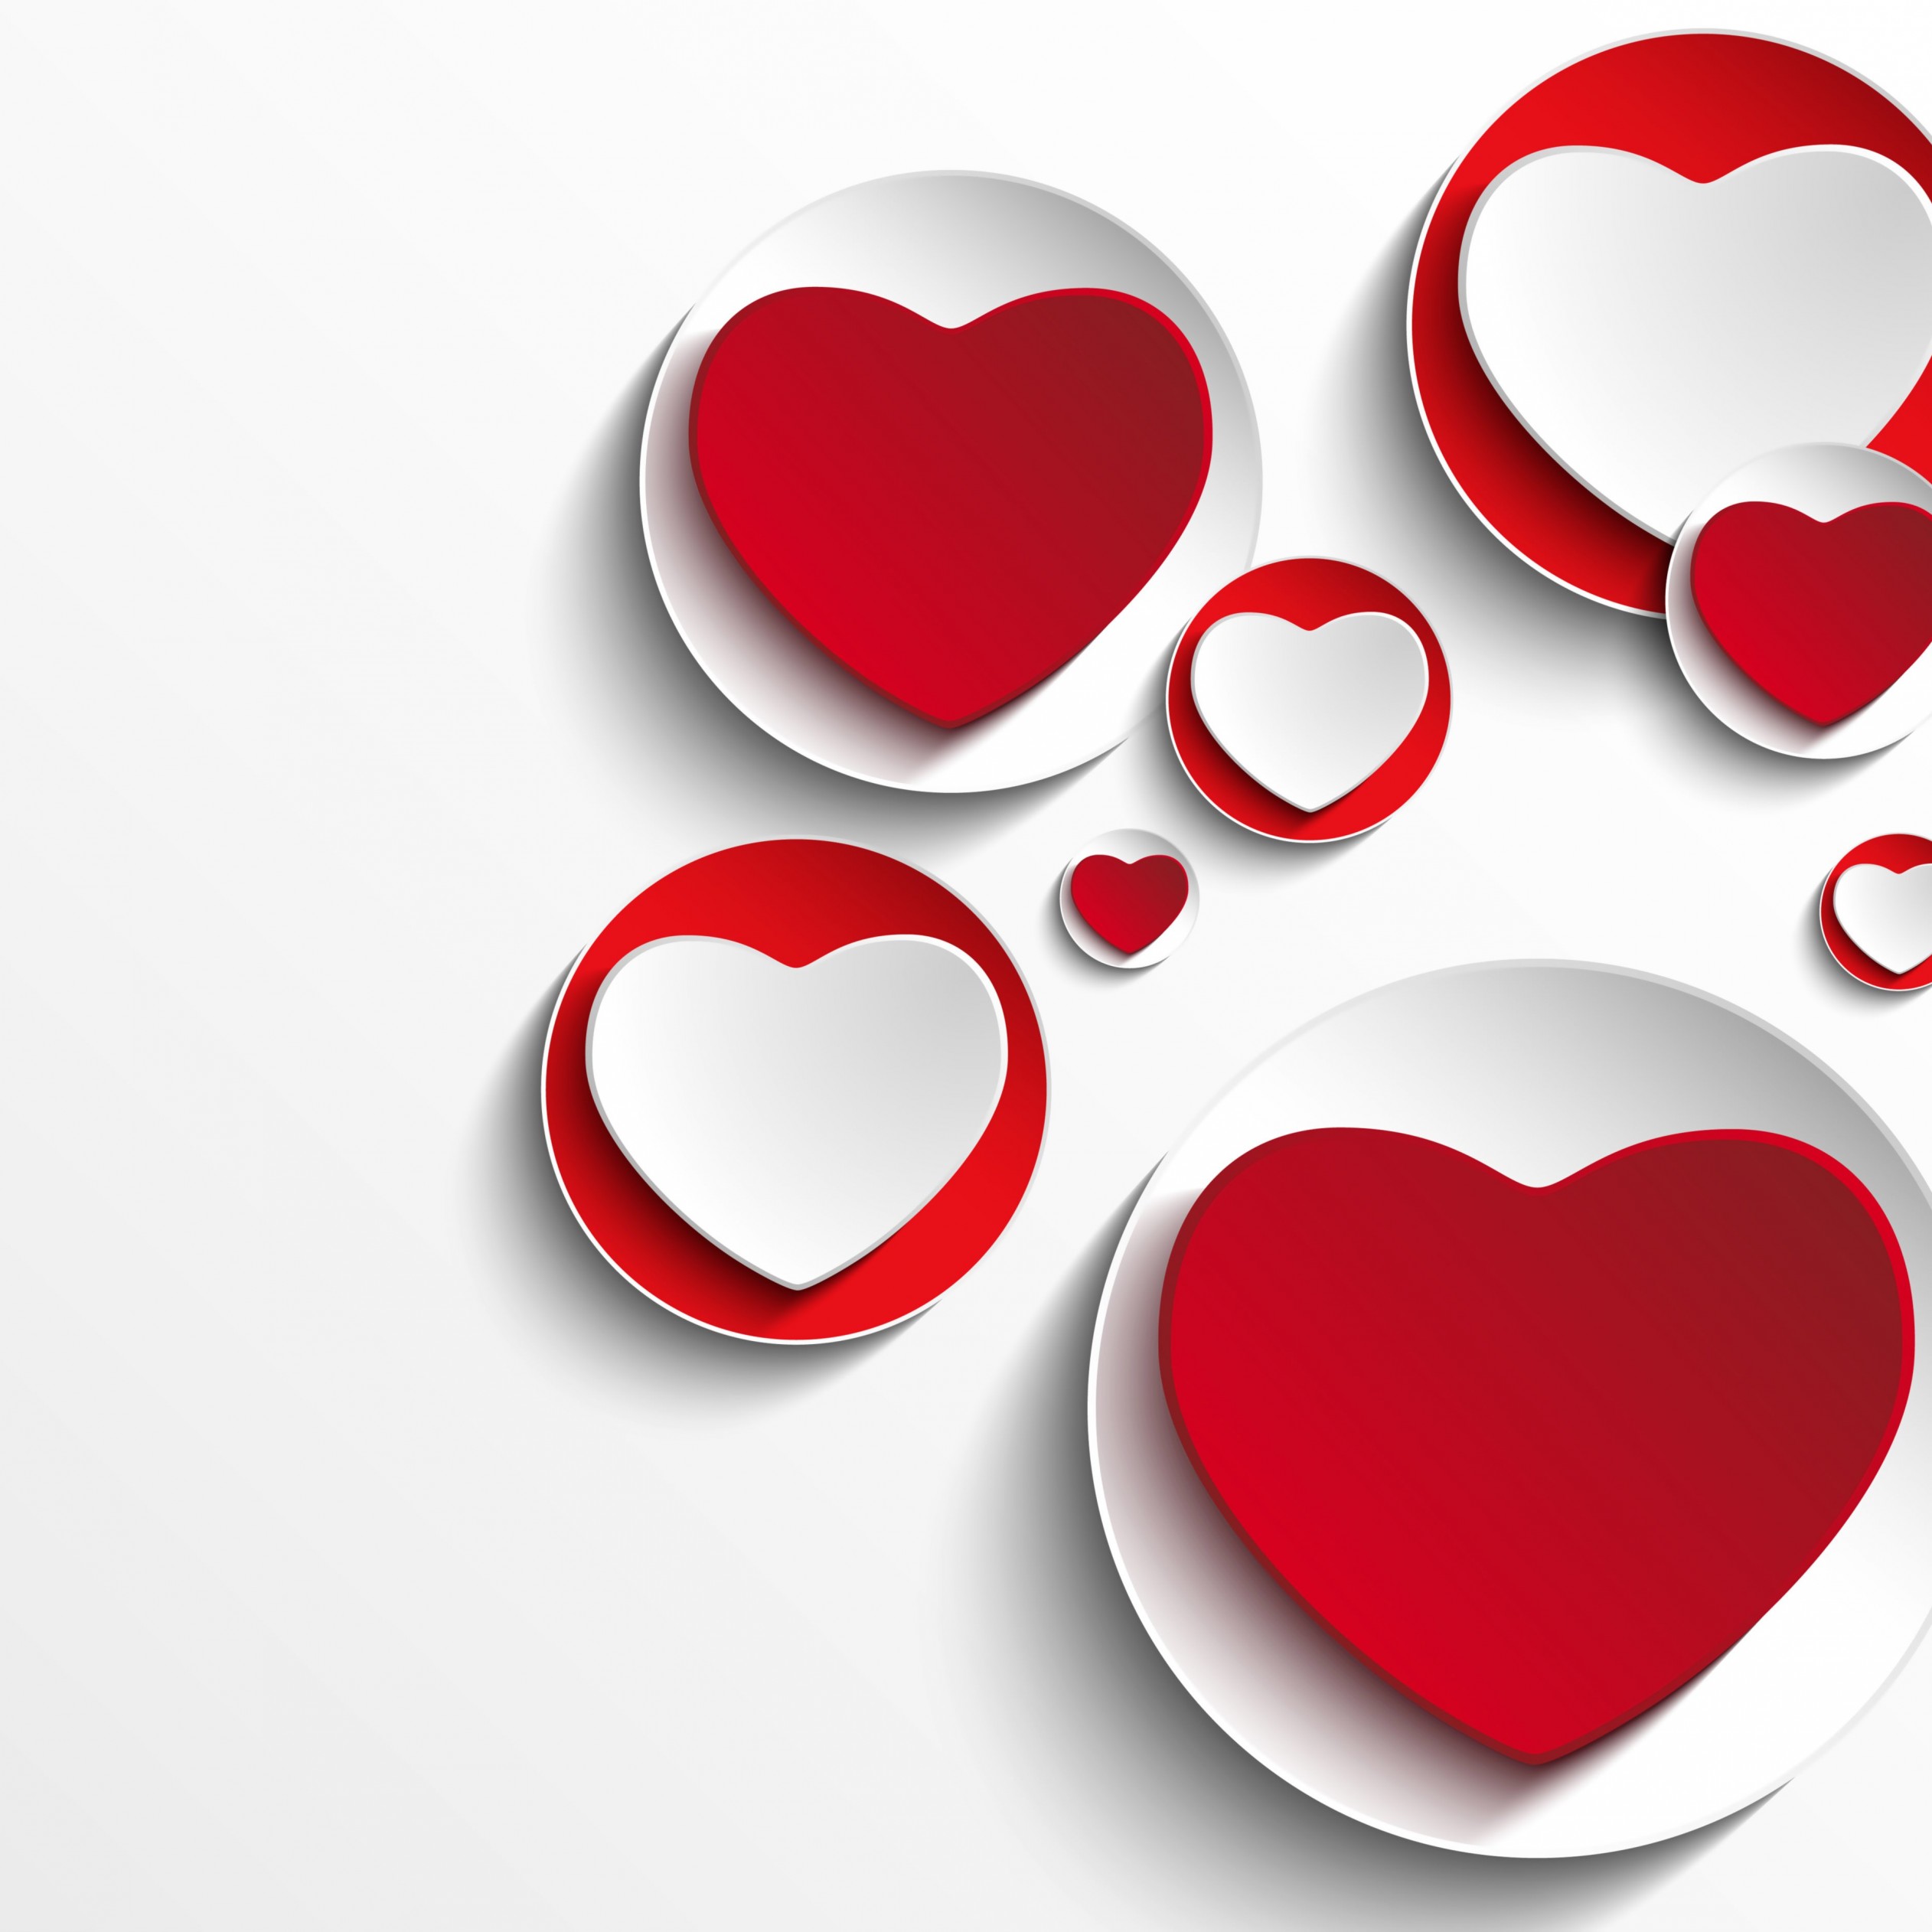 Minimalistic Hearts Shapes Wallpaper for Apple iPad mini 2